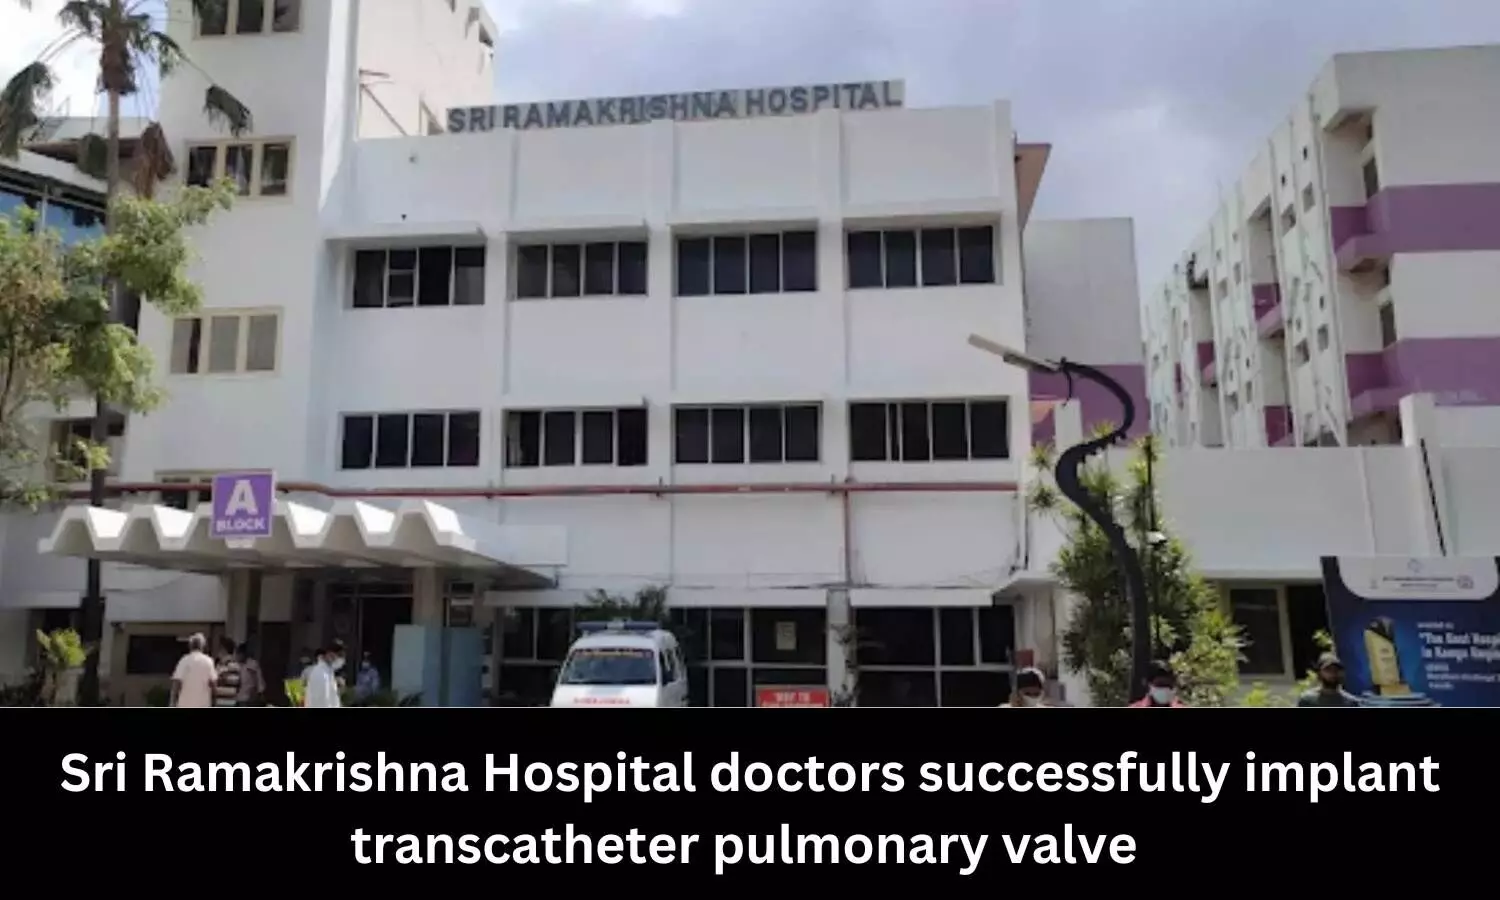 Doctors at Sri Ramakrishna Hospital successfully implant transcatheter pulmonary valve in patient